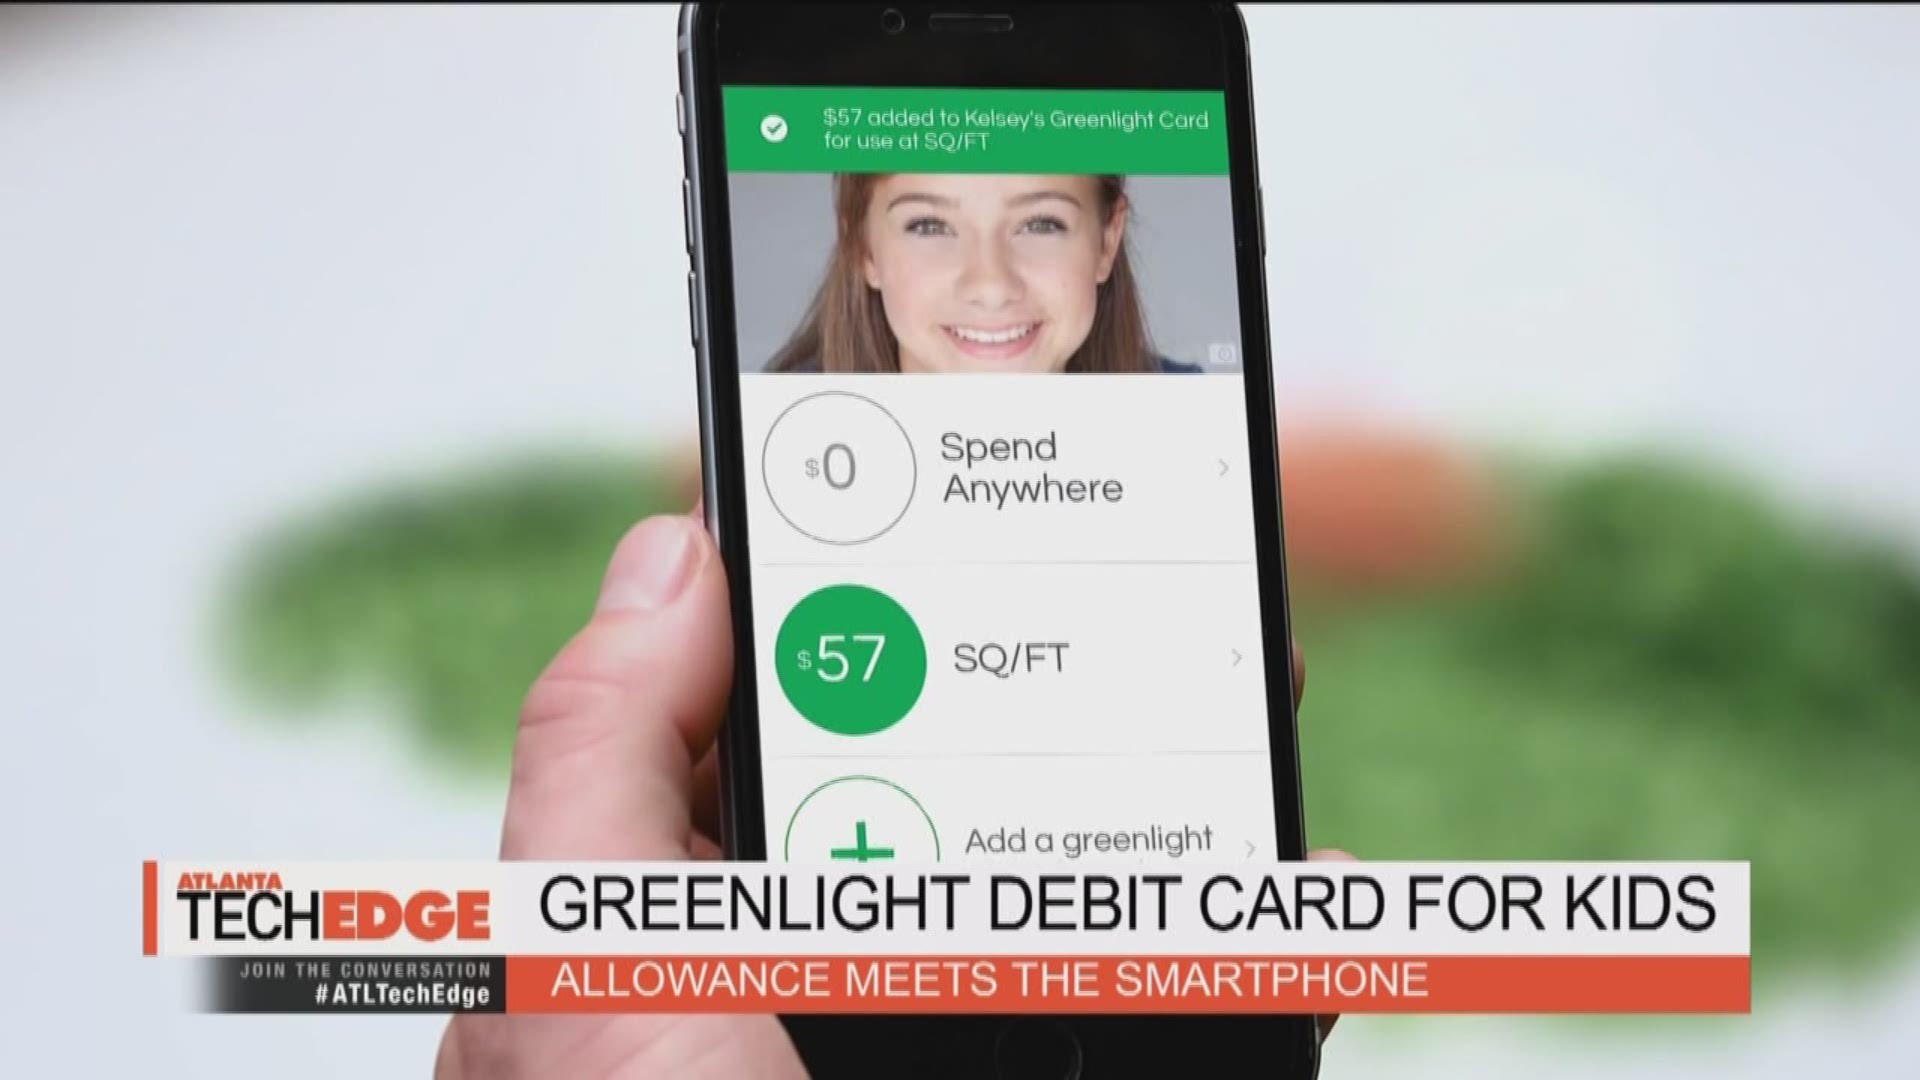 Greenlight Card Faq Greenlight Debit Card For Kids Teaches Financial